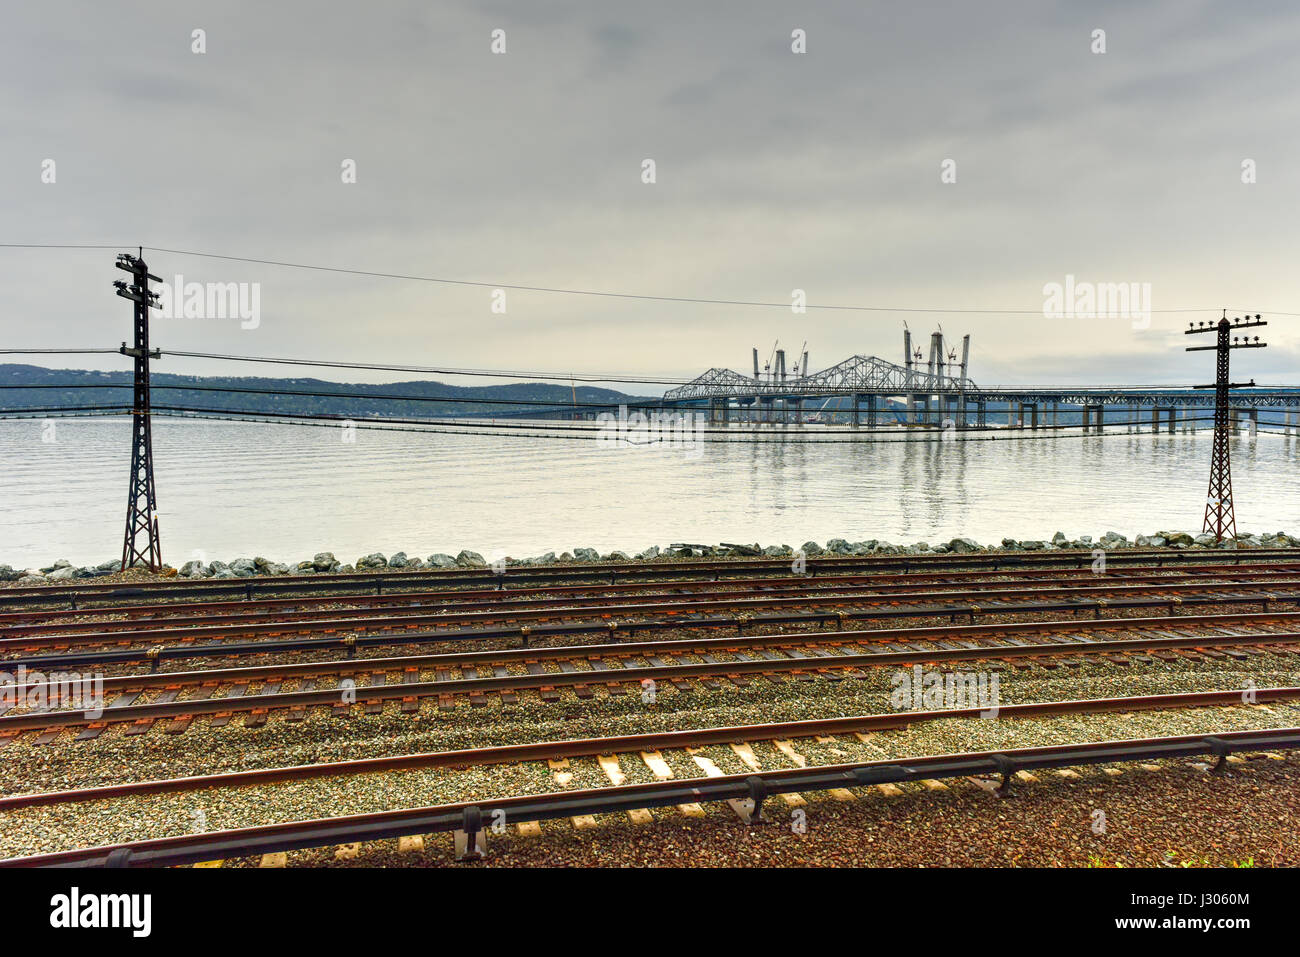 The new Tappan Zee bridge under construction across the Hudson River in New York across train tracks. Stock Photo